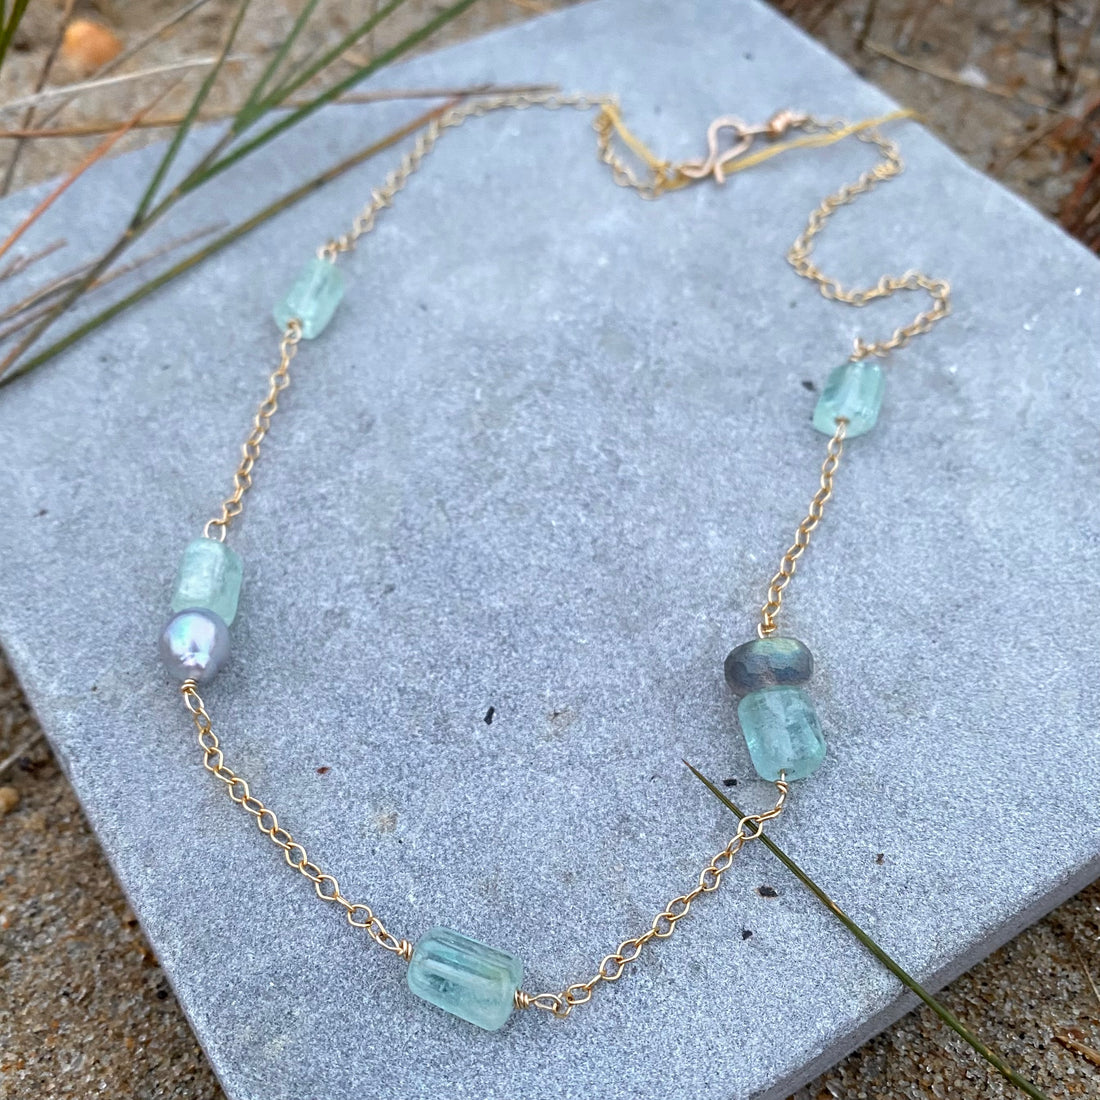 Handmade on Cape Cod – Cape Cod Jewelers